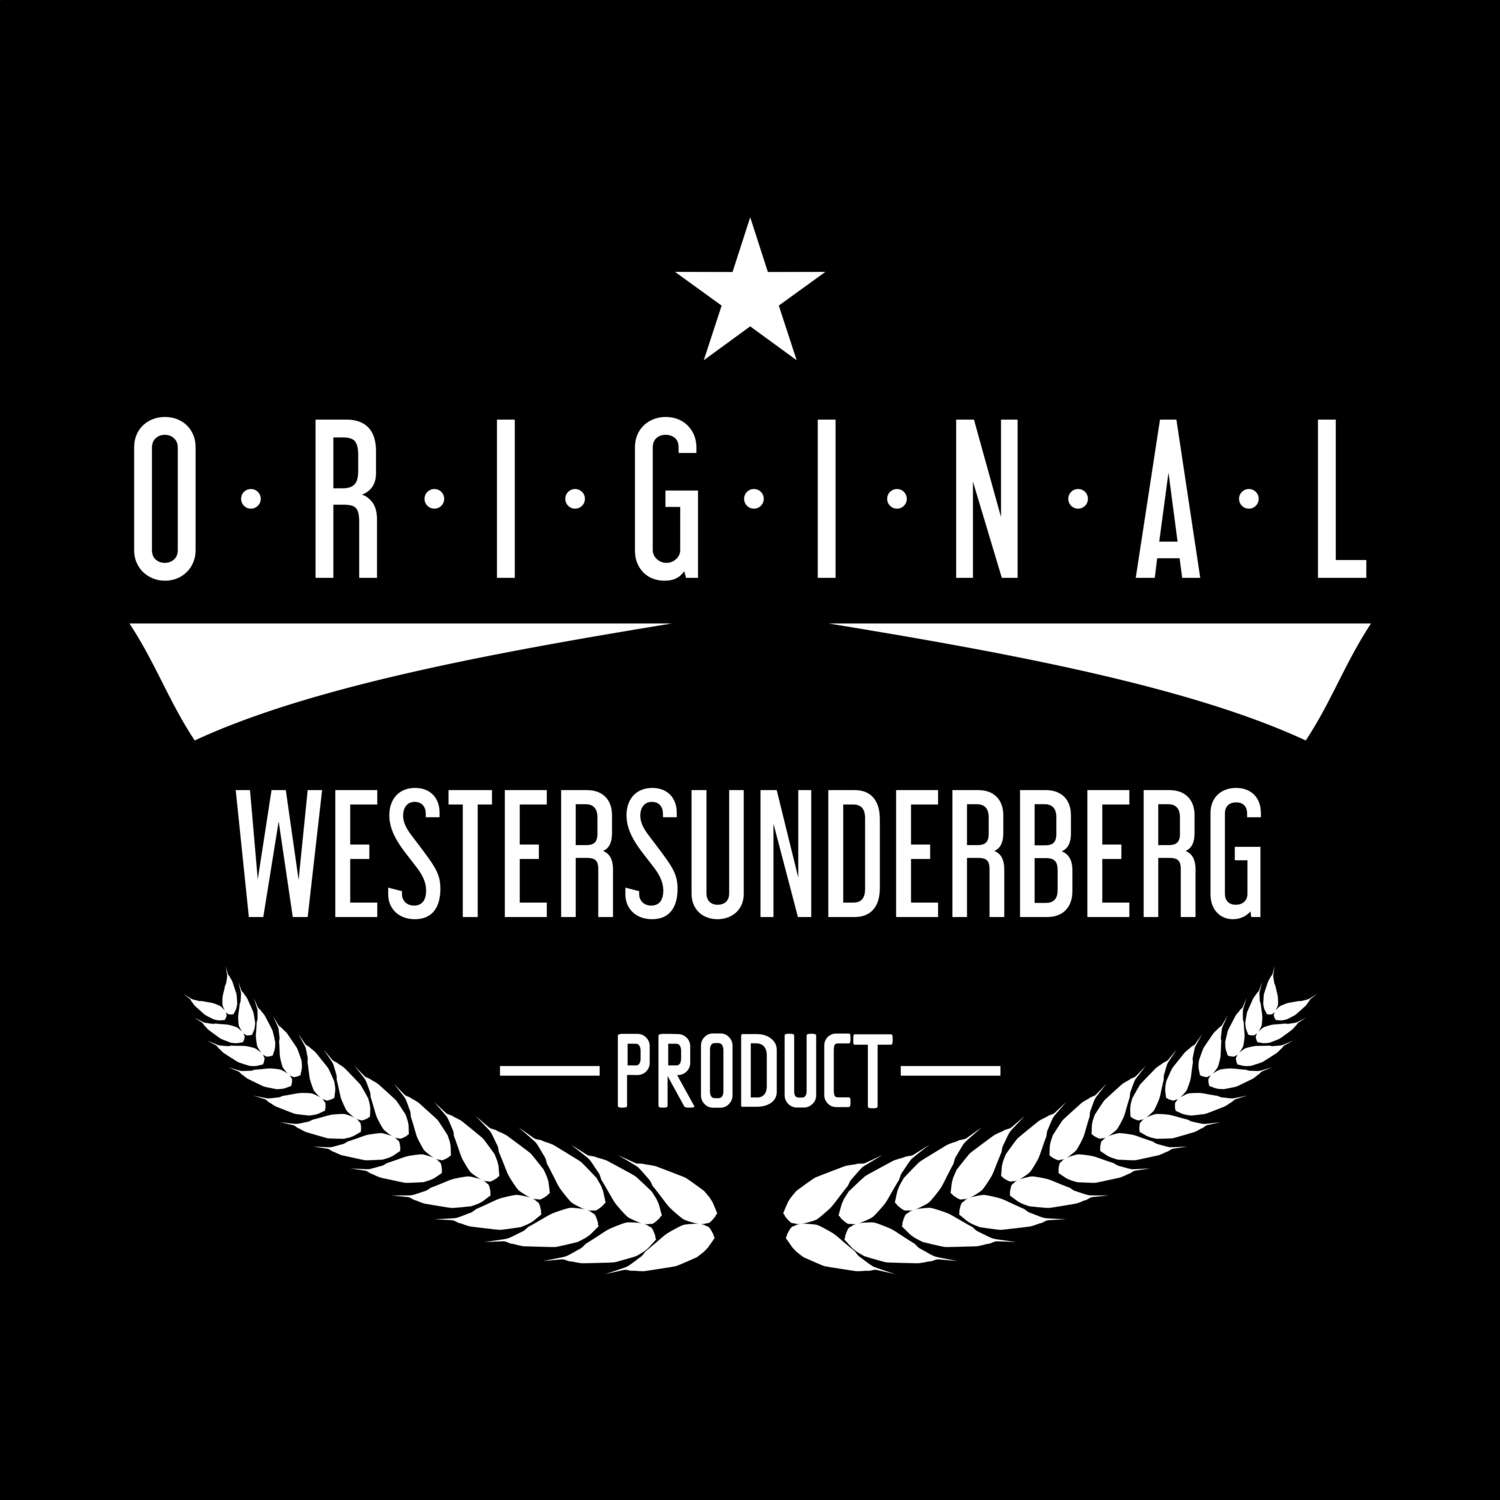 Westersunderberg T-Shirt »Original Product«